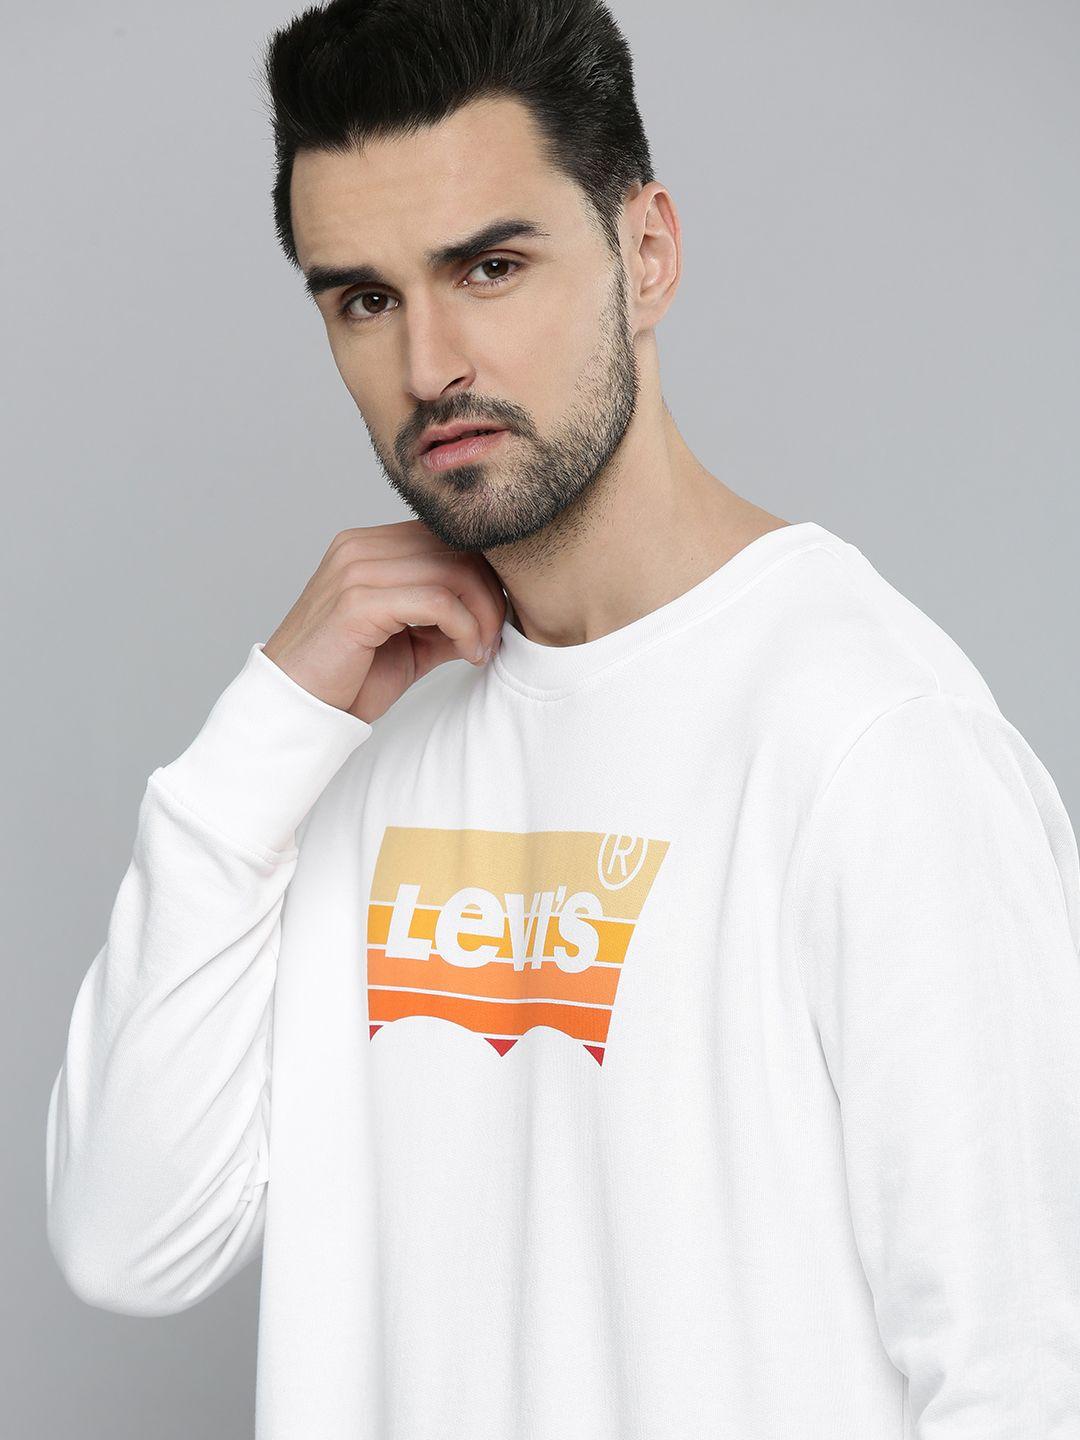 levis-men-white-printed-pure-cotton-sweatshirt